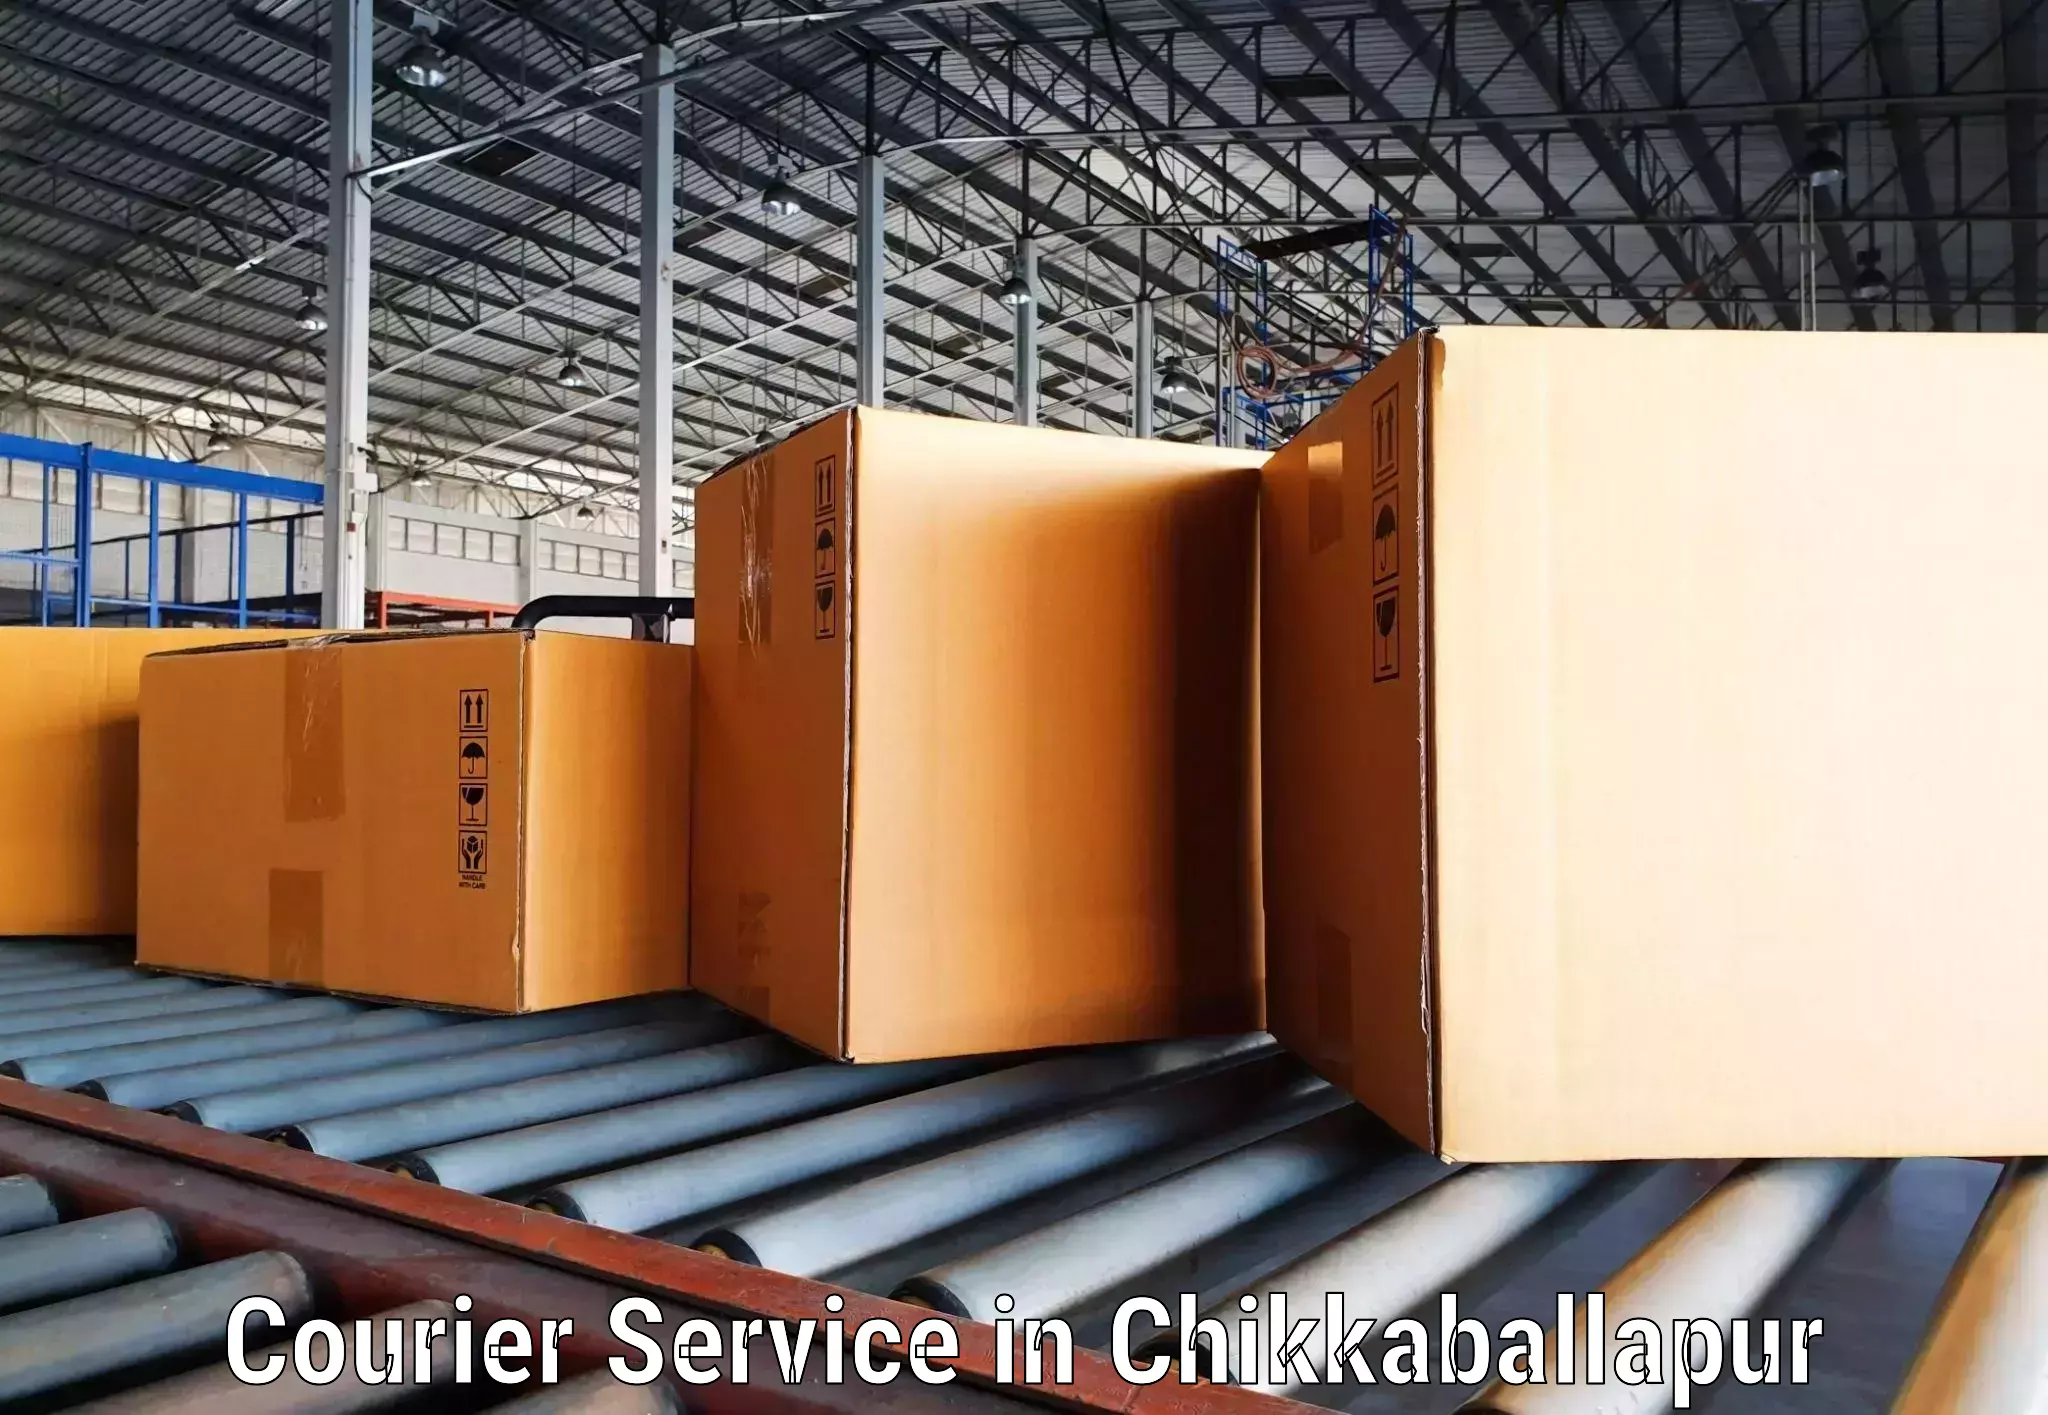 Affordable parcel service in Chikkaballapur